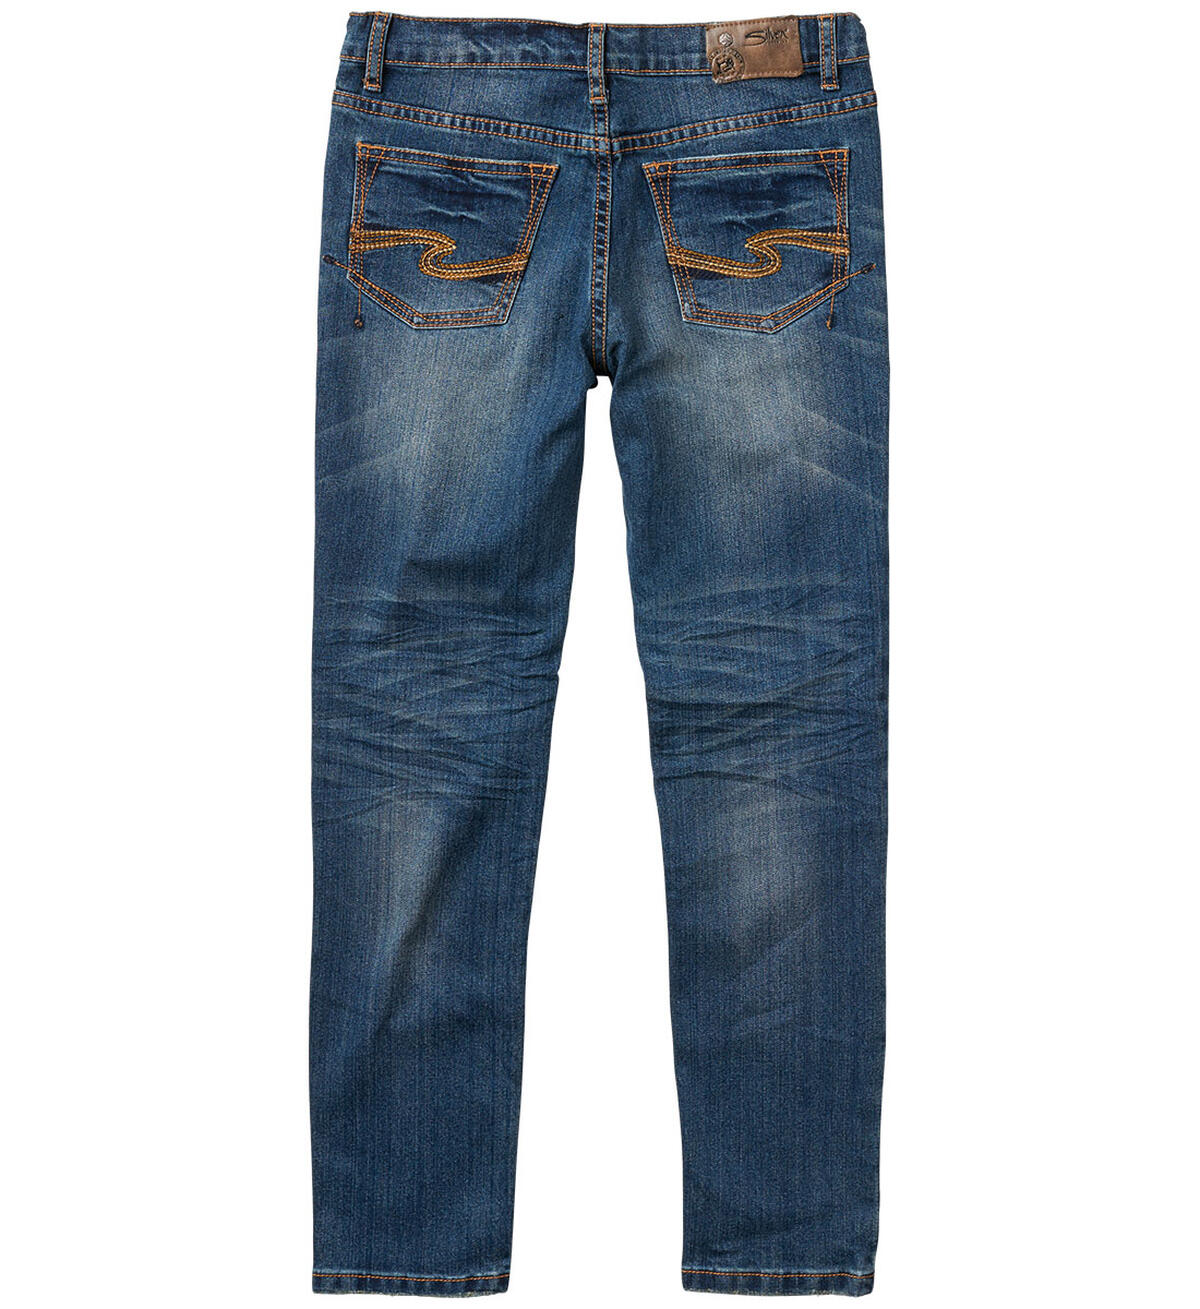 Cairo City Skinny Jeans in Medium Wash (4-7), , hi-res image number 1